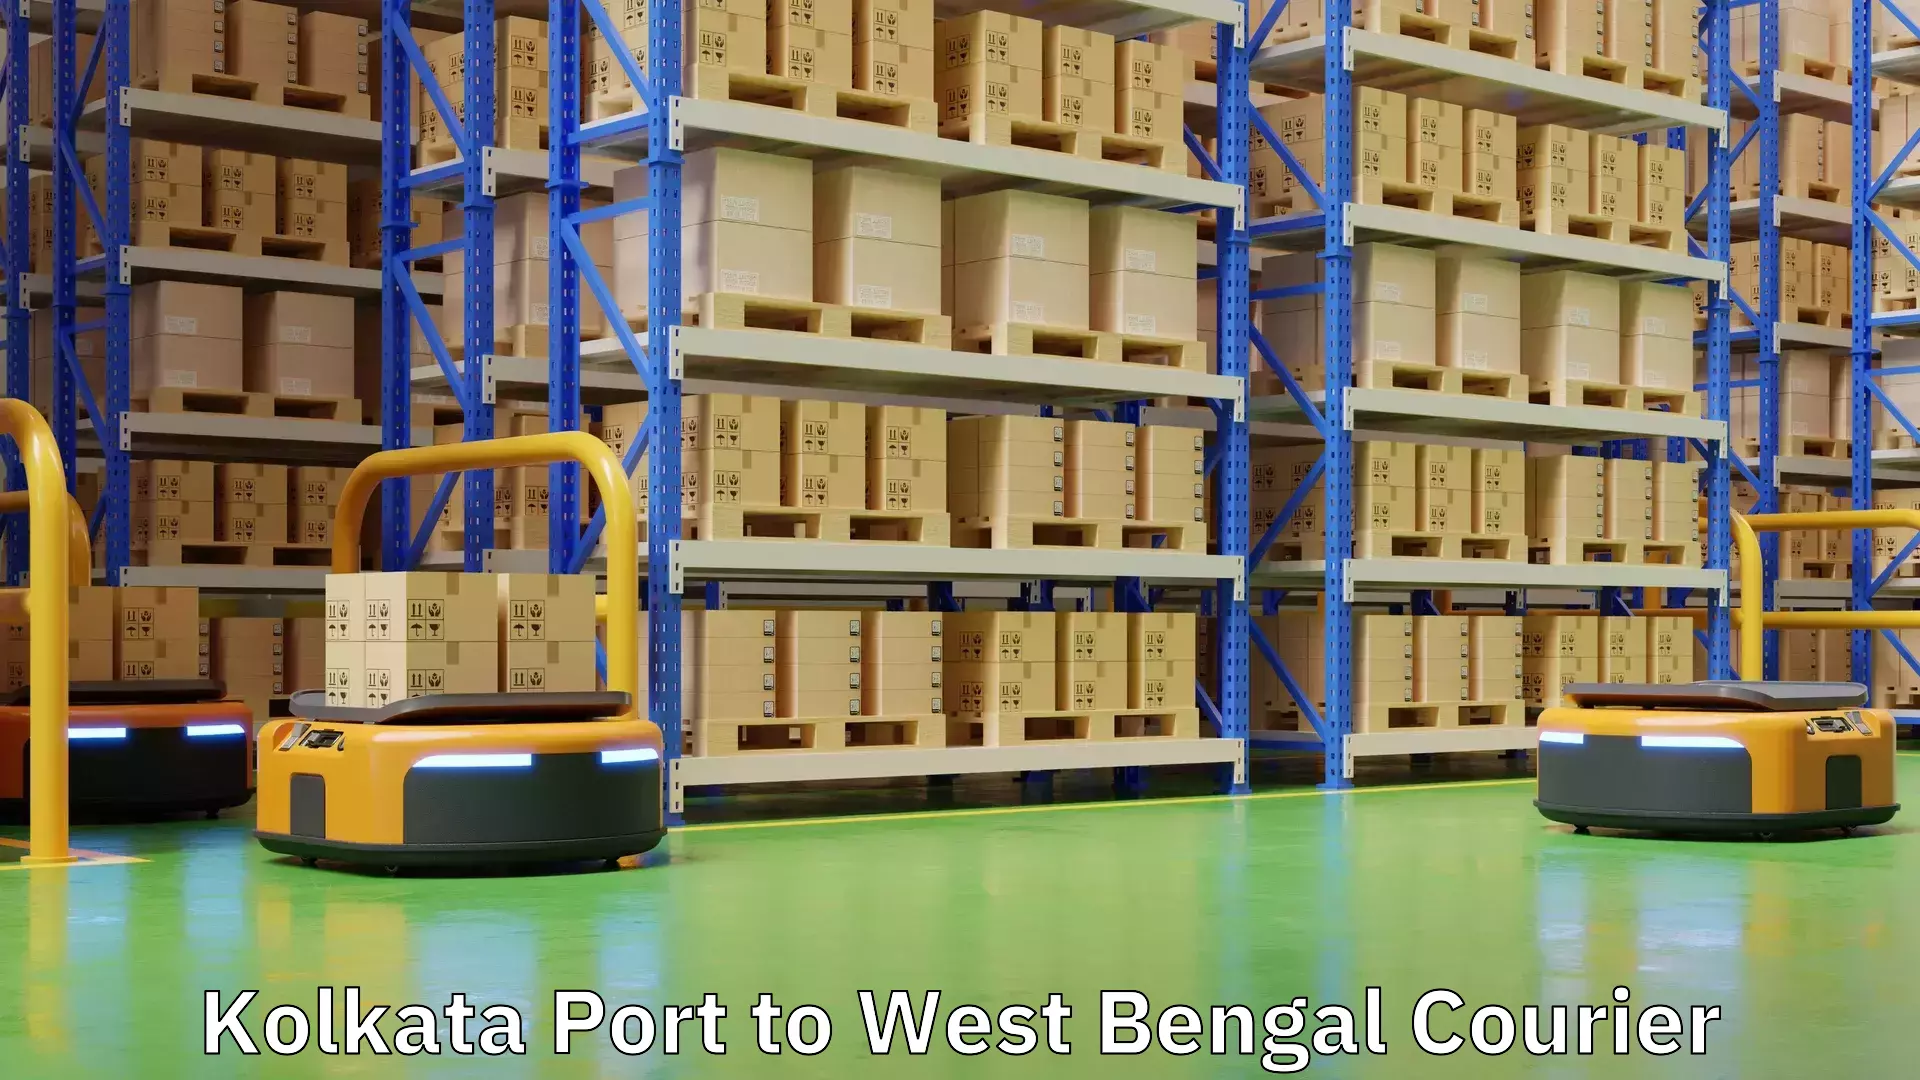 Courier app Kolkata Port to Barrackpore